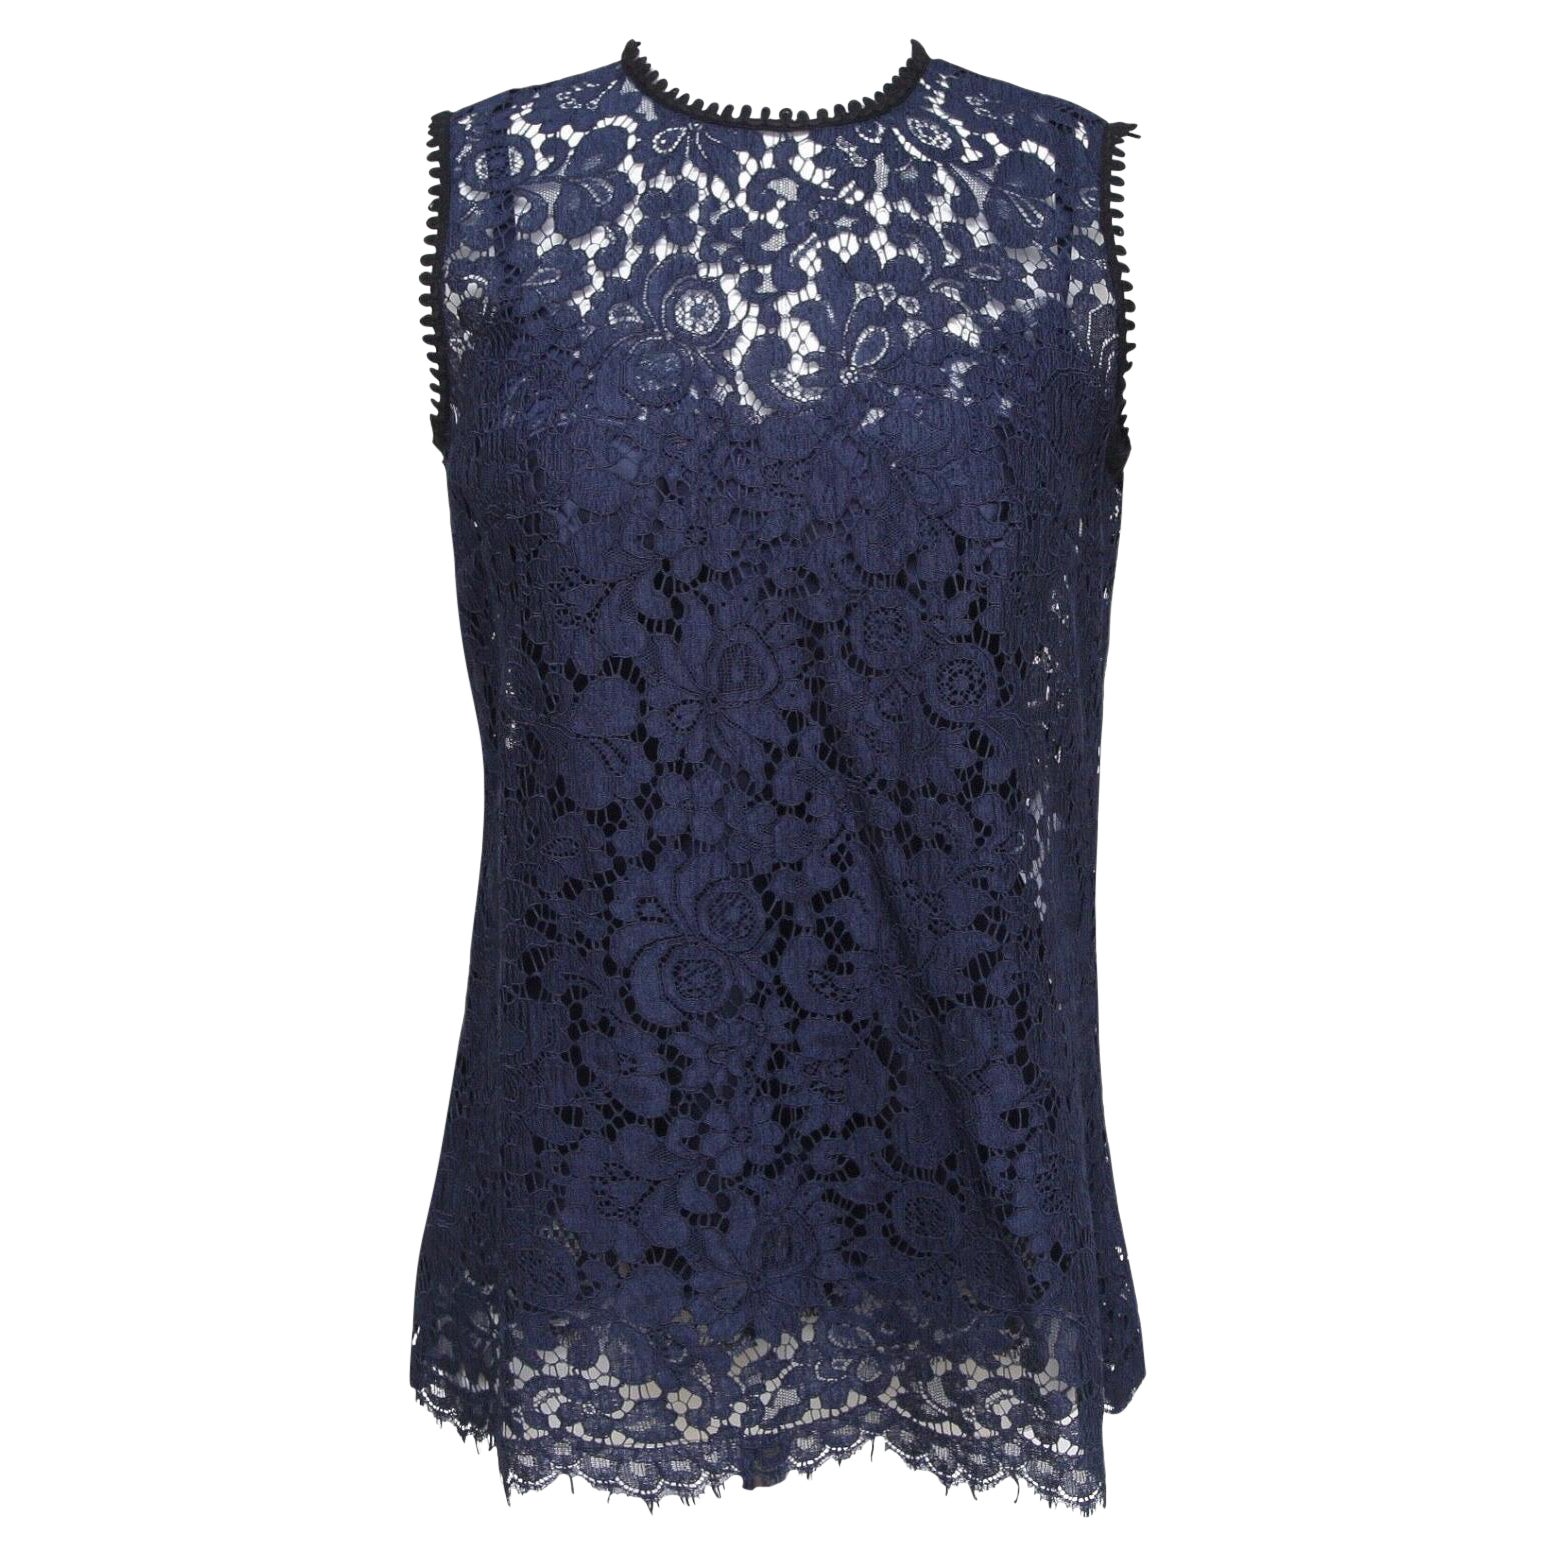 DOLCE & GABBANA Blouse Shirt Top Navy Blue Black Sleeveless Lace Sz 40 Ret $1495 For Sale